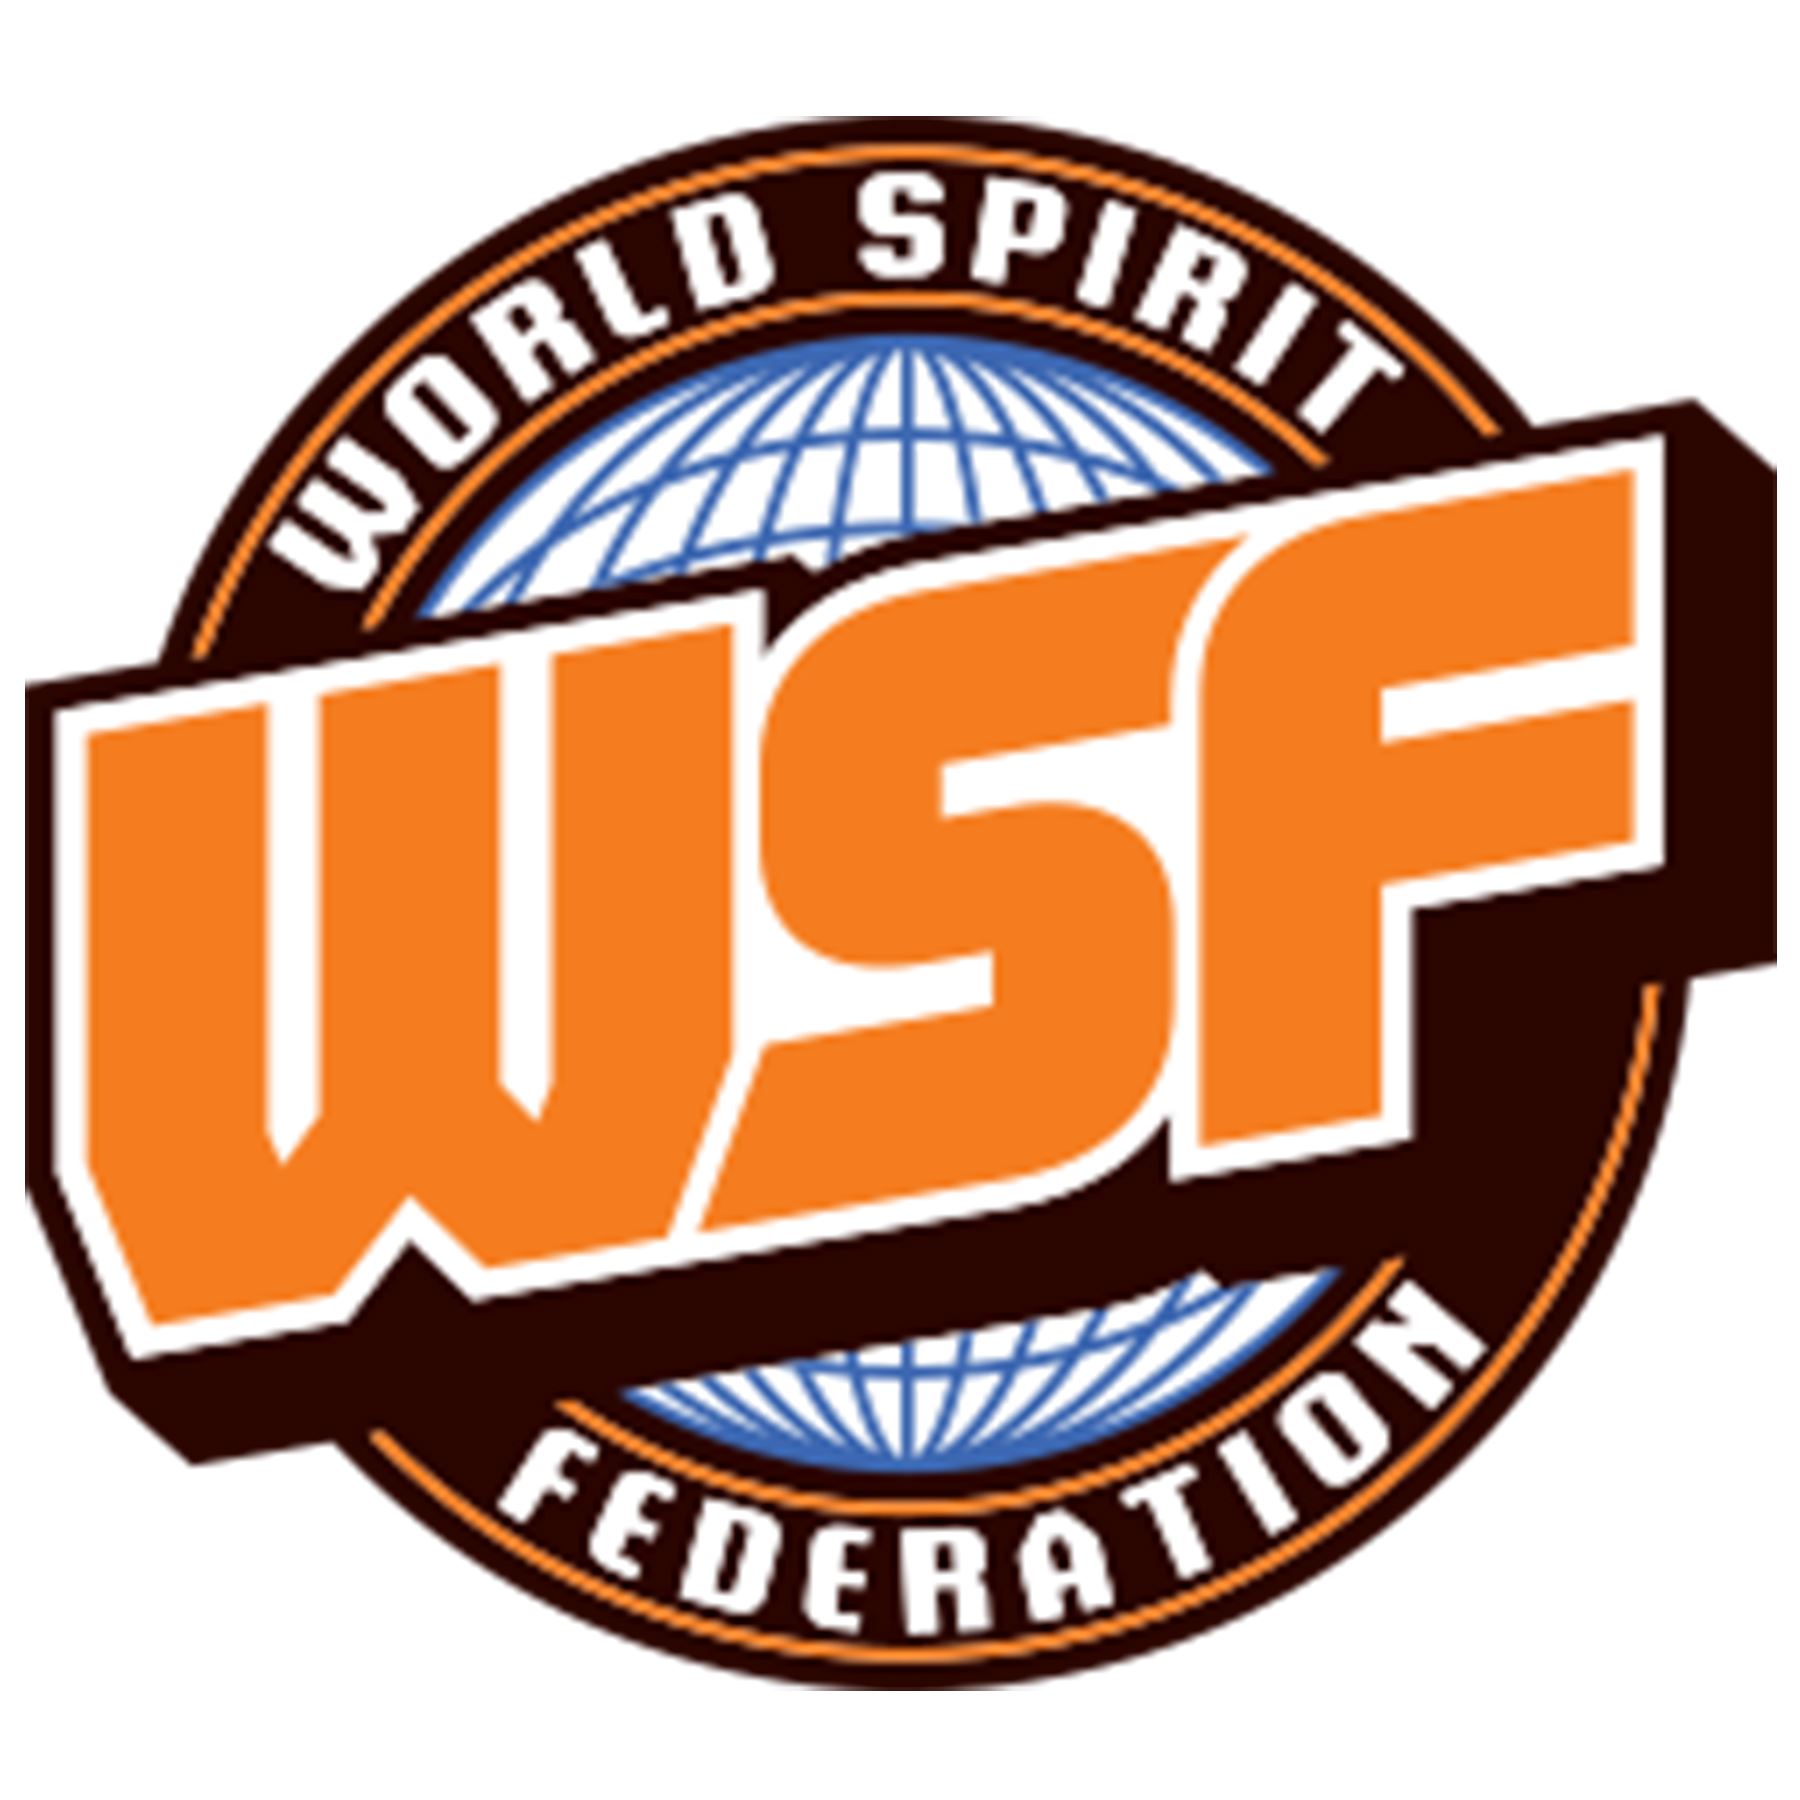 World Spirit Federation Logo